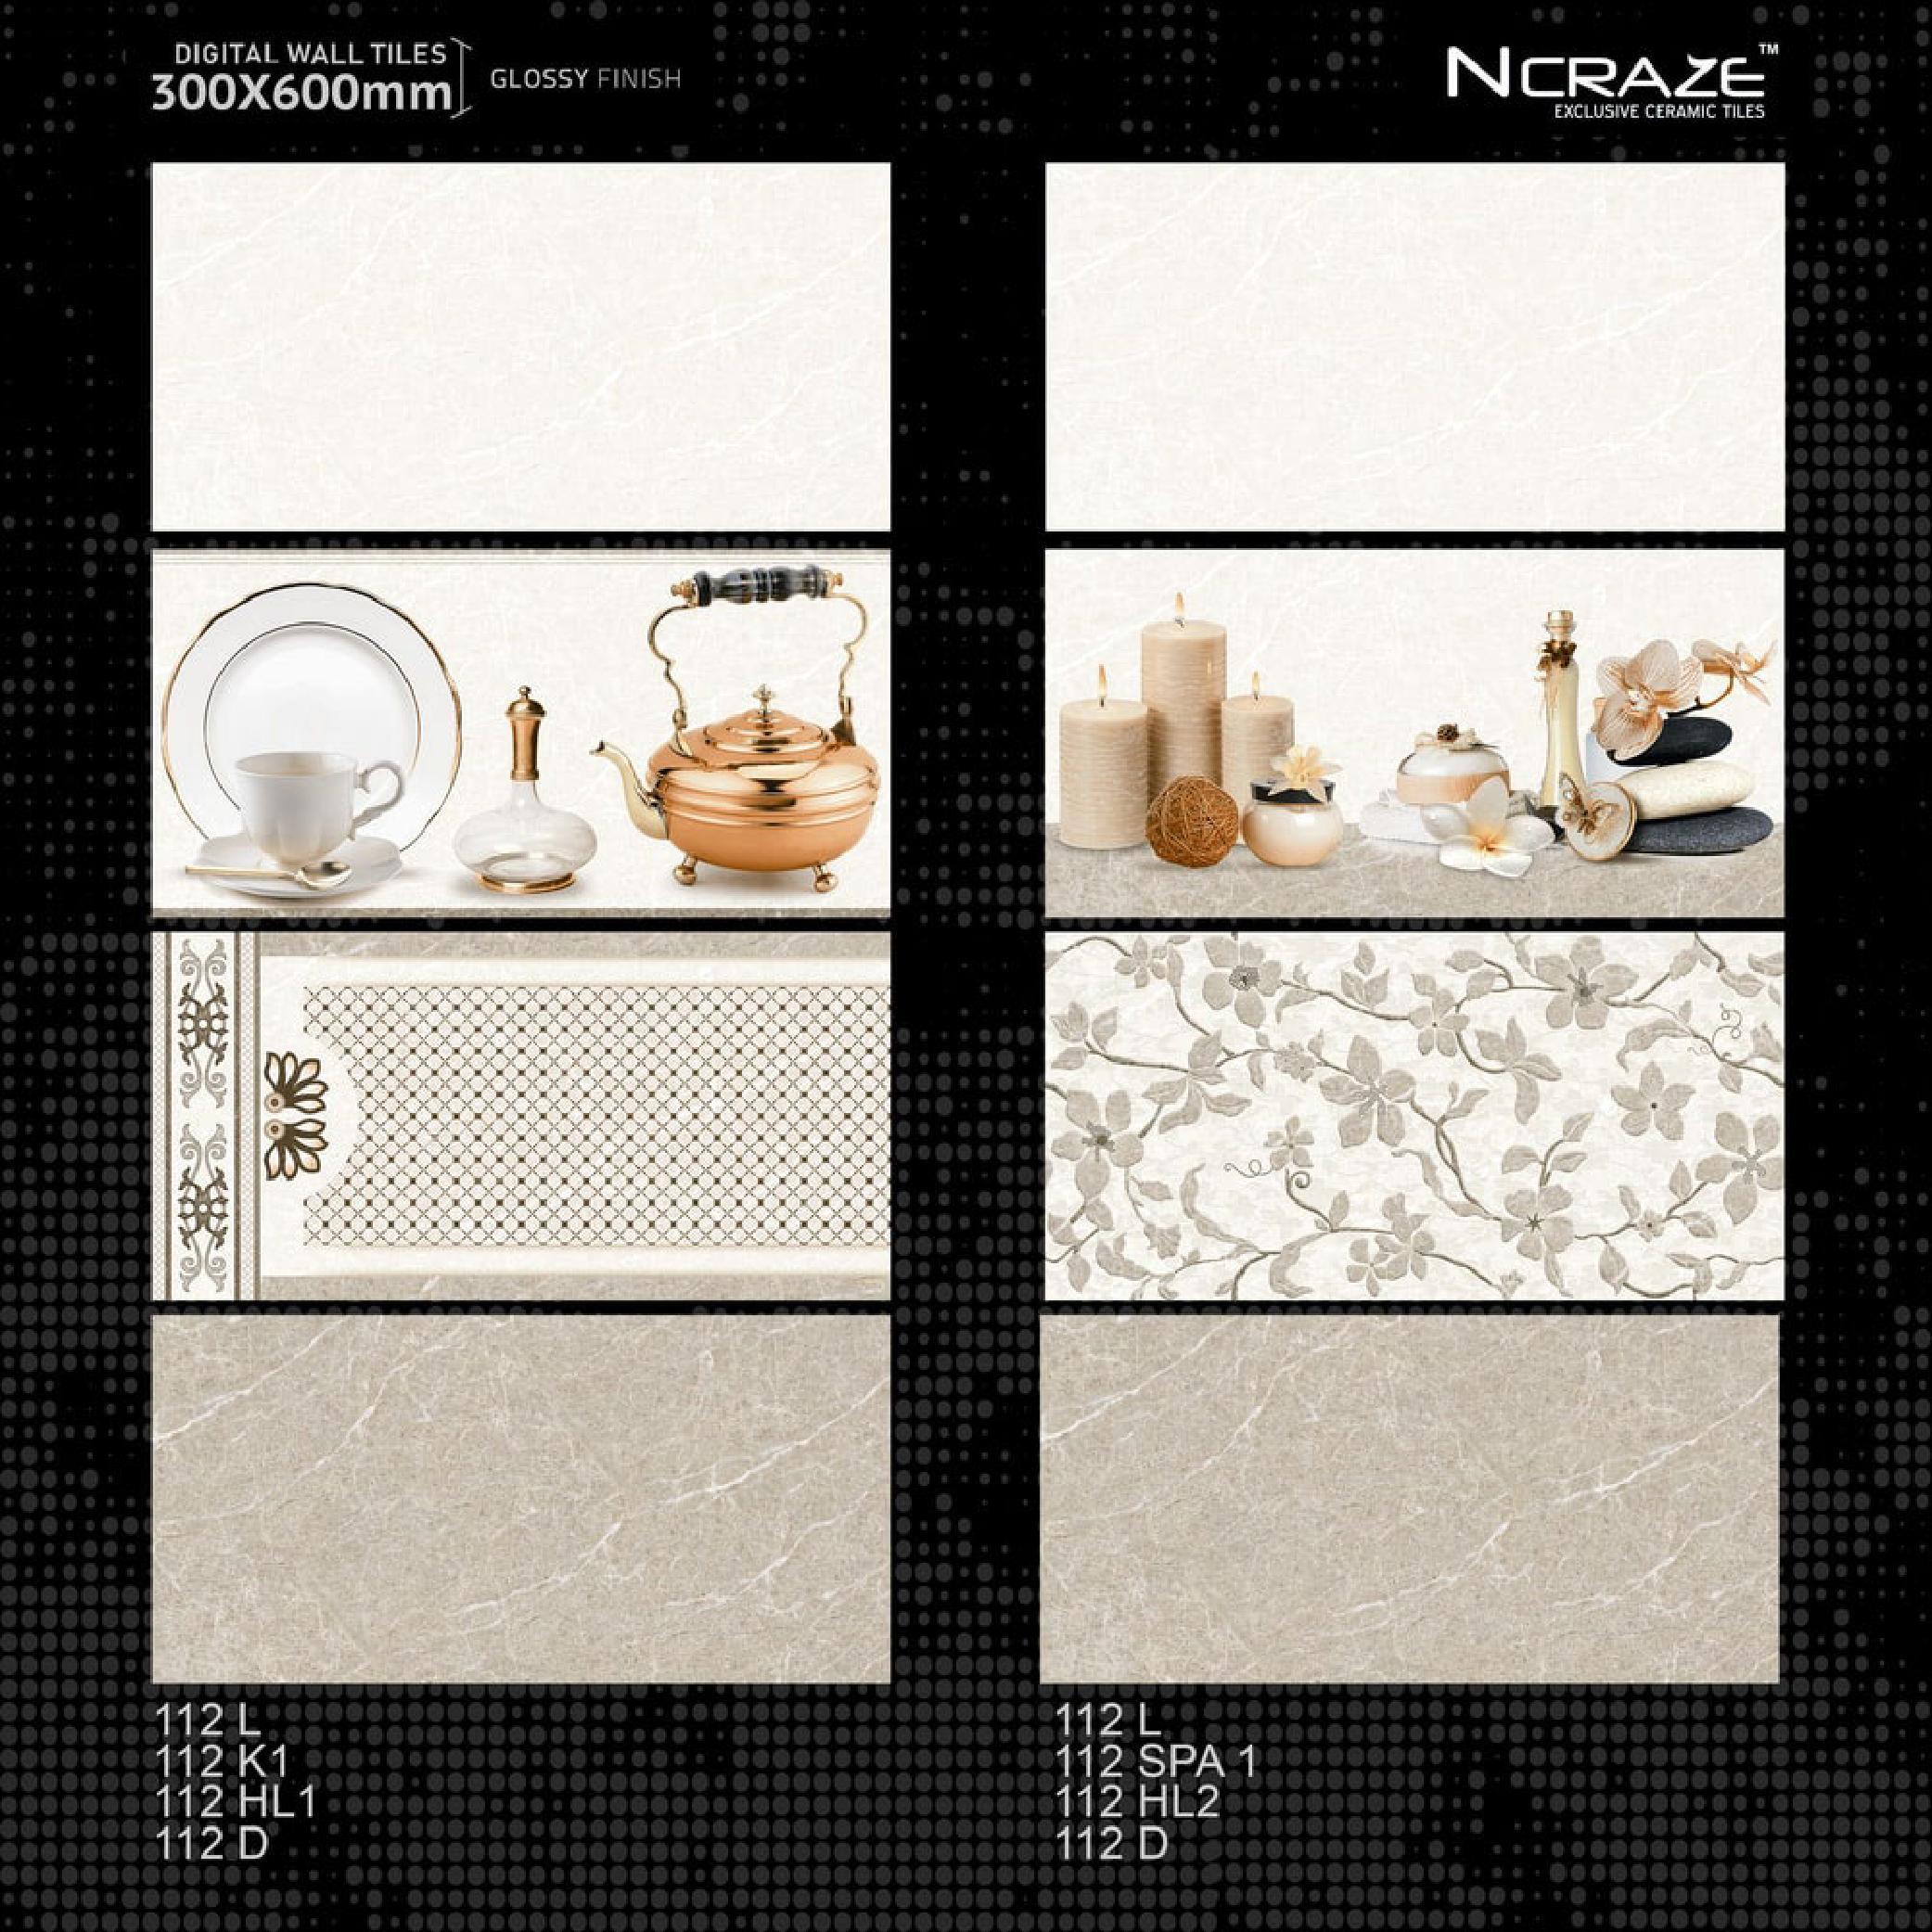 Attractive Design 300x600mm Wall tiles